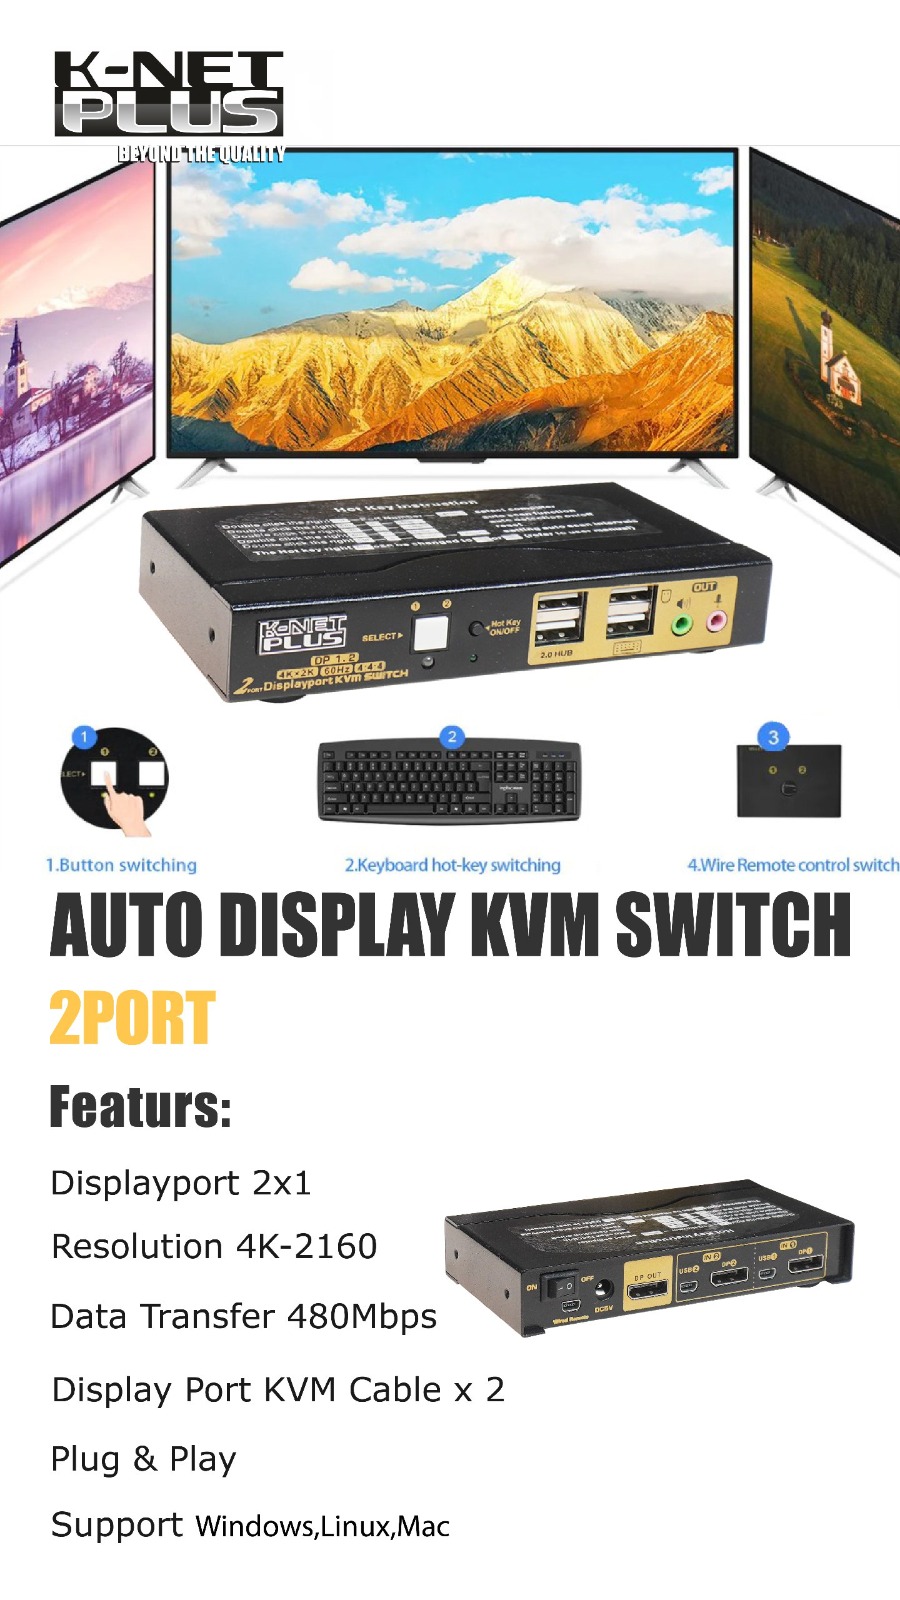 سوییچ KVM دیسپلی دو پورت کی نت پلاس مدل KP-SWKDP02